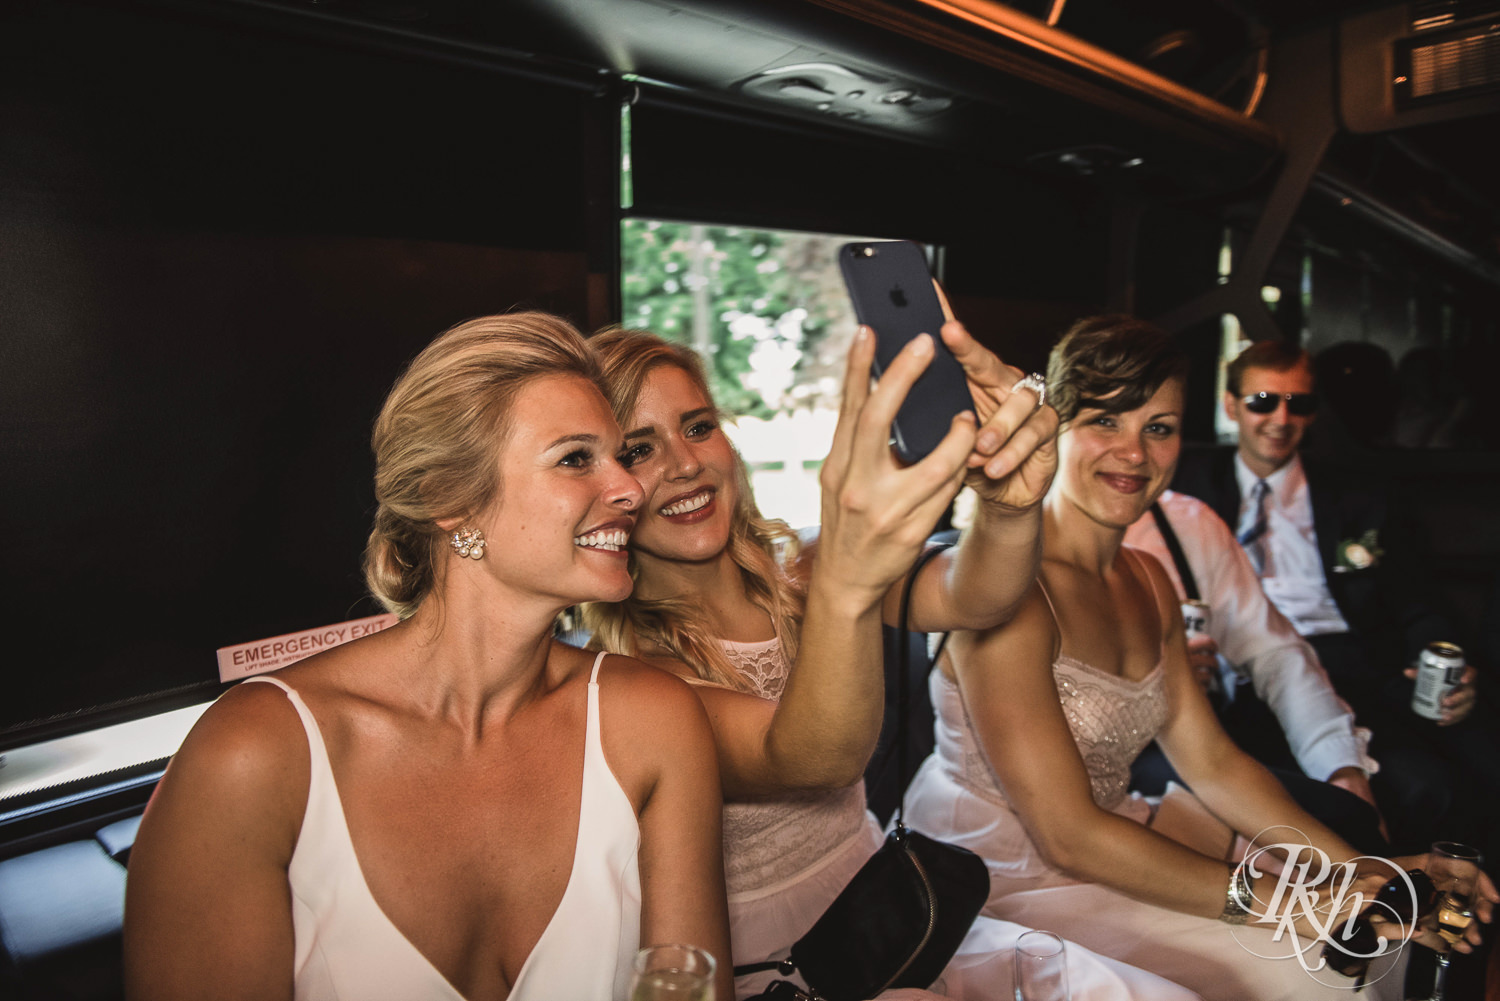 Wedding party takes selfies on party bus in Minneapolis, Minnesota.